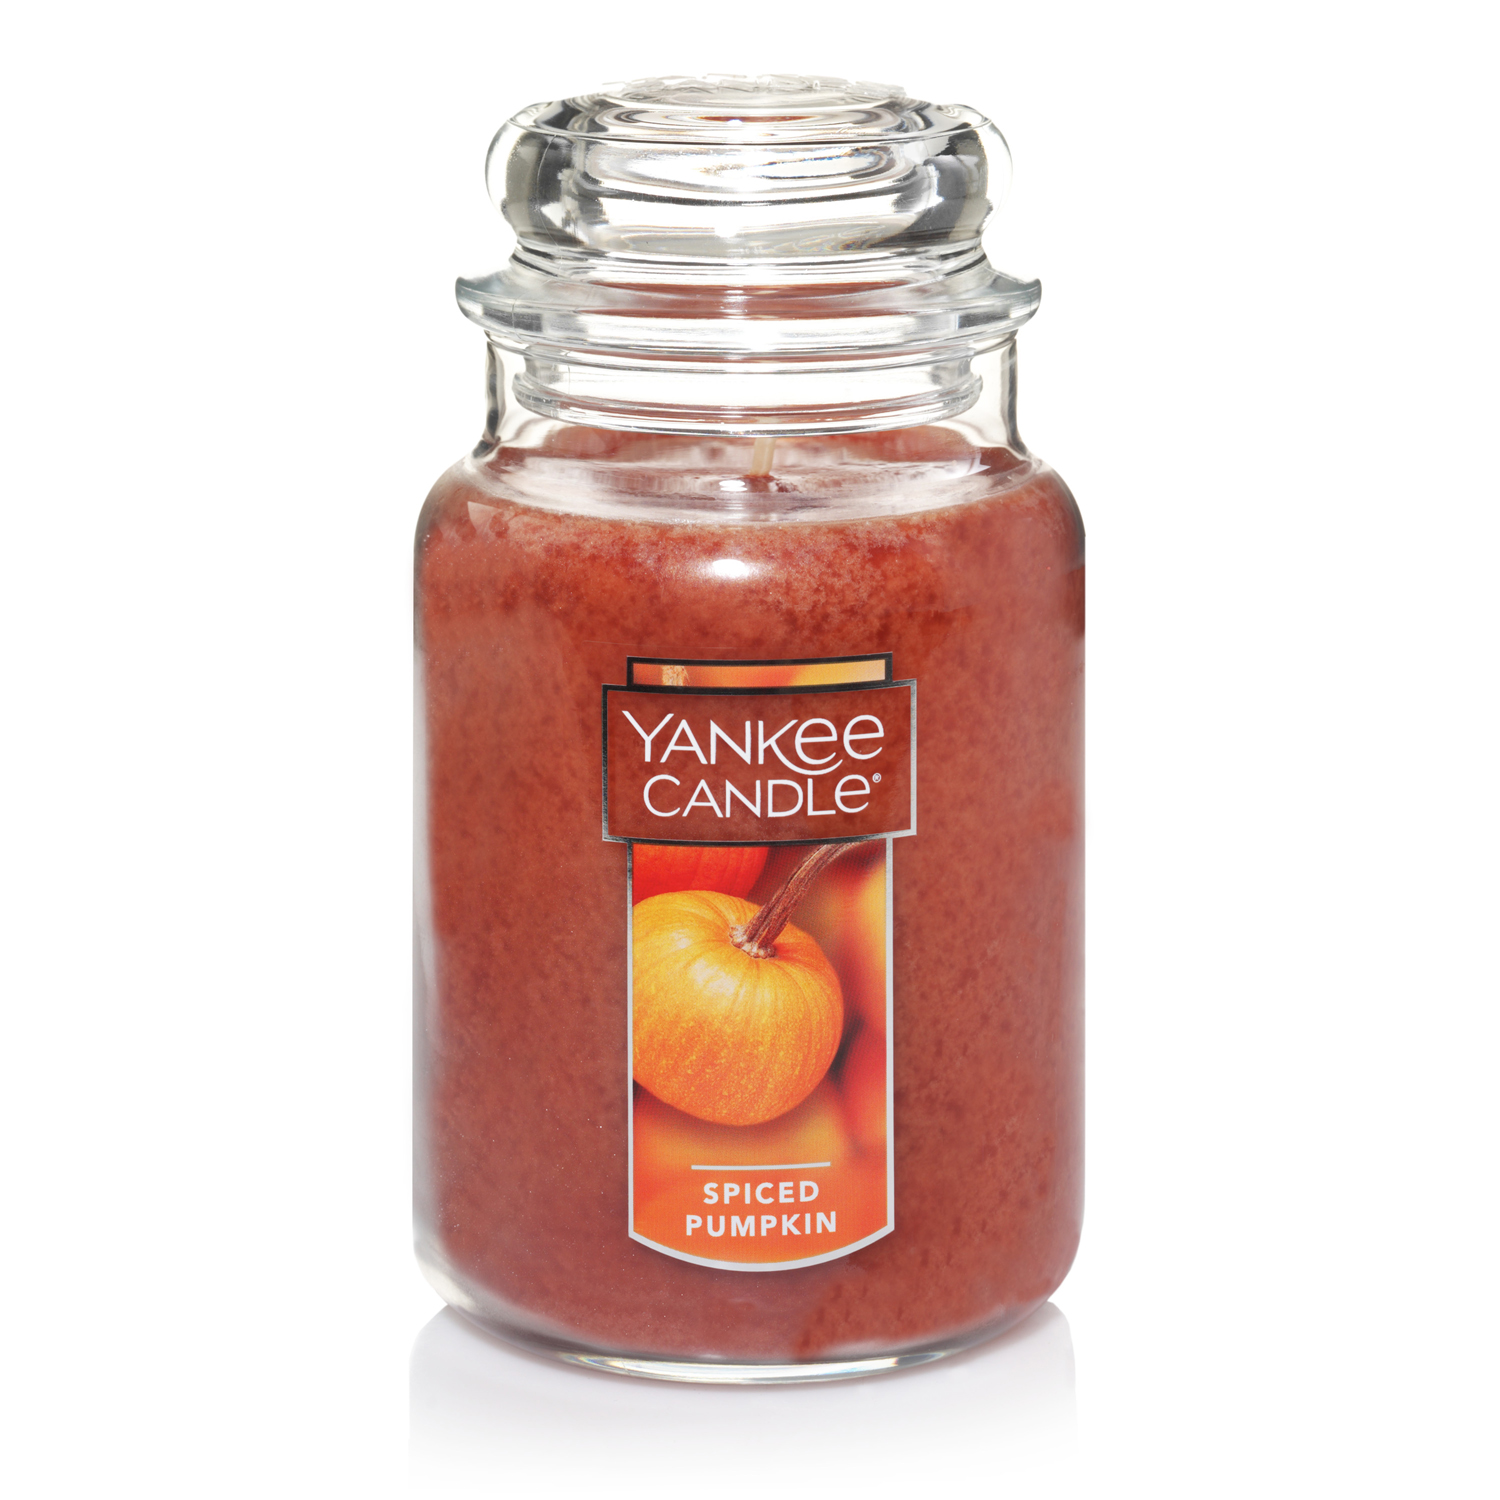 Yankee Candle Spiced Pumpkin - Original Large Jar candle - image 1 of 6